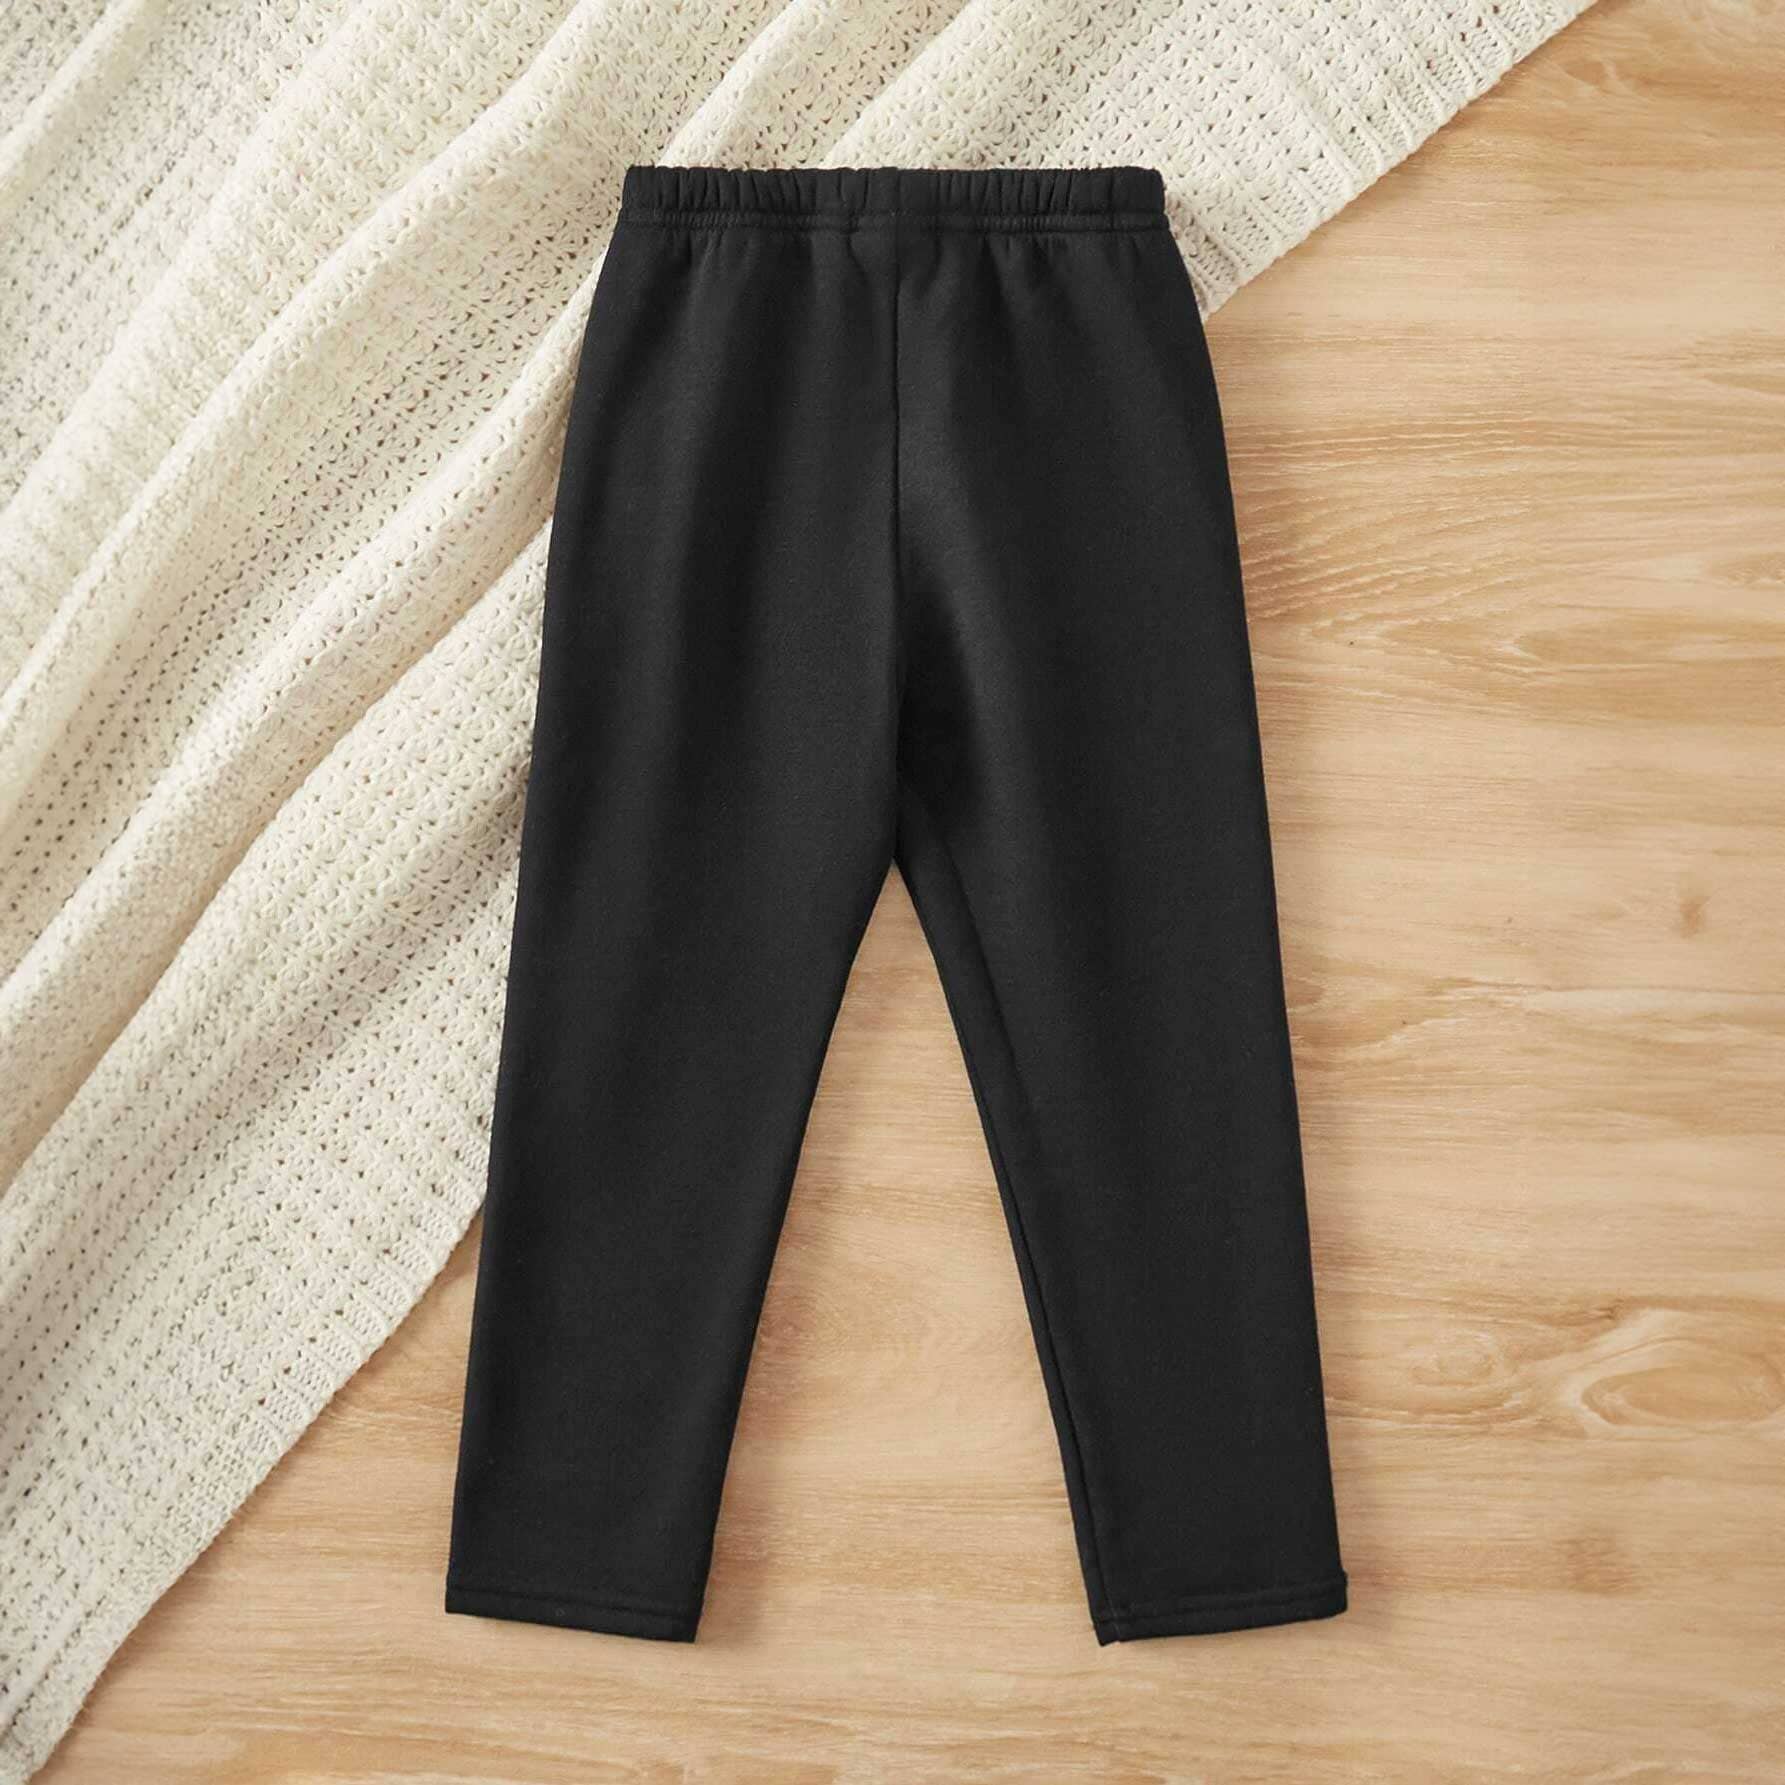 Bunbury Kid's Thermal Base Layer Trousers Boy's Trousers RAM Black 18 (1-2 Years) 